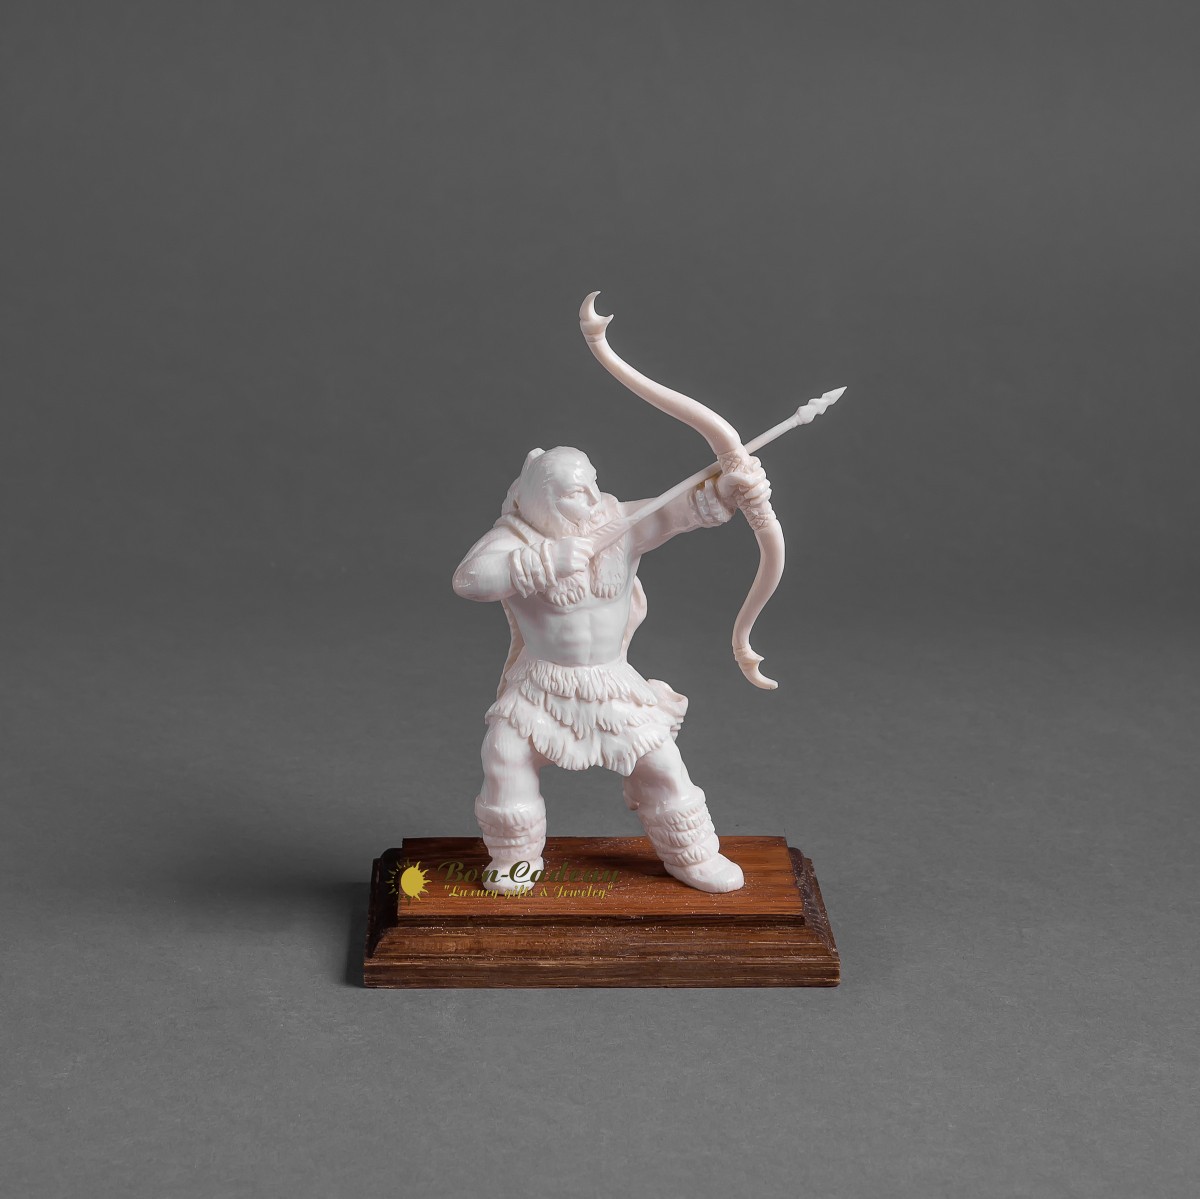 Скульптура Охотник с луком (h=14 см)